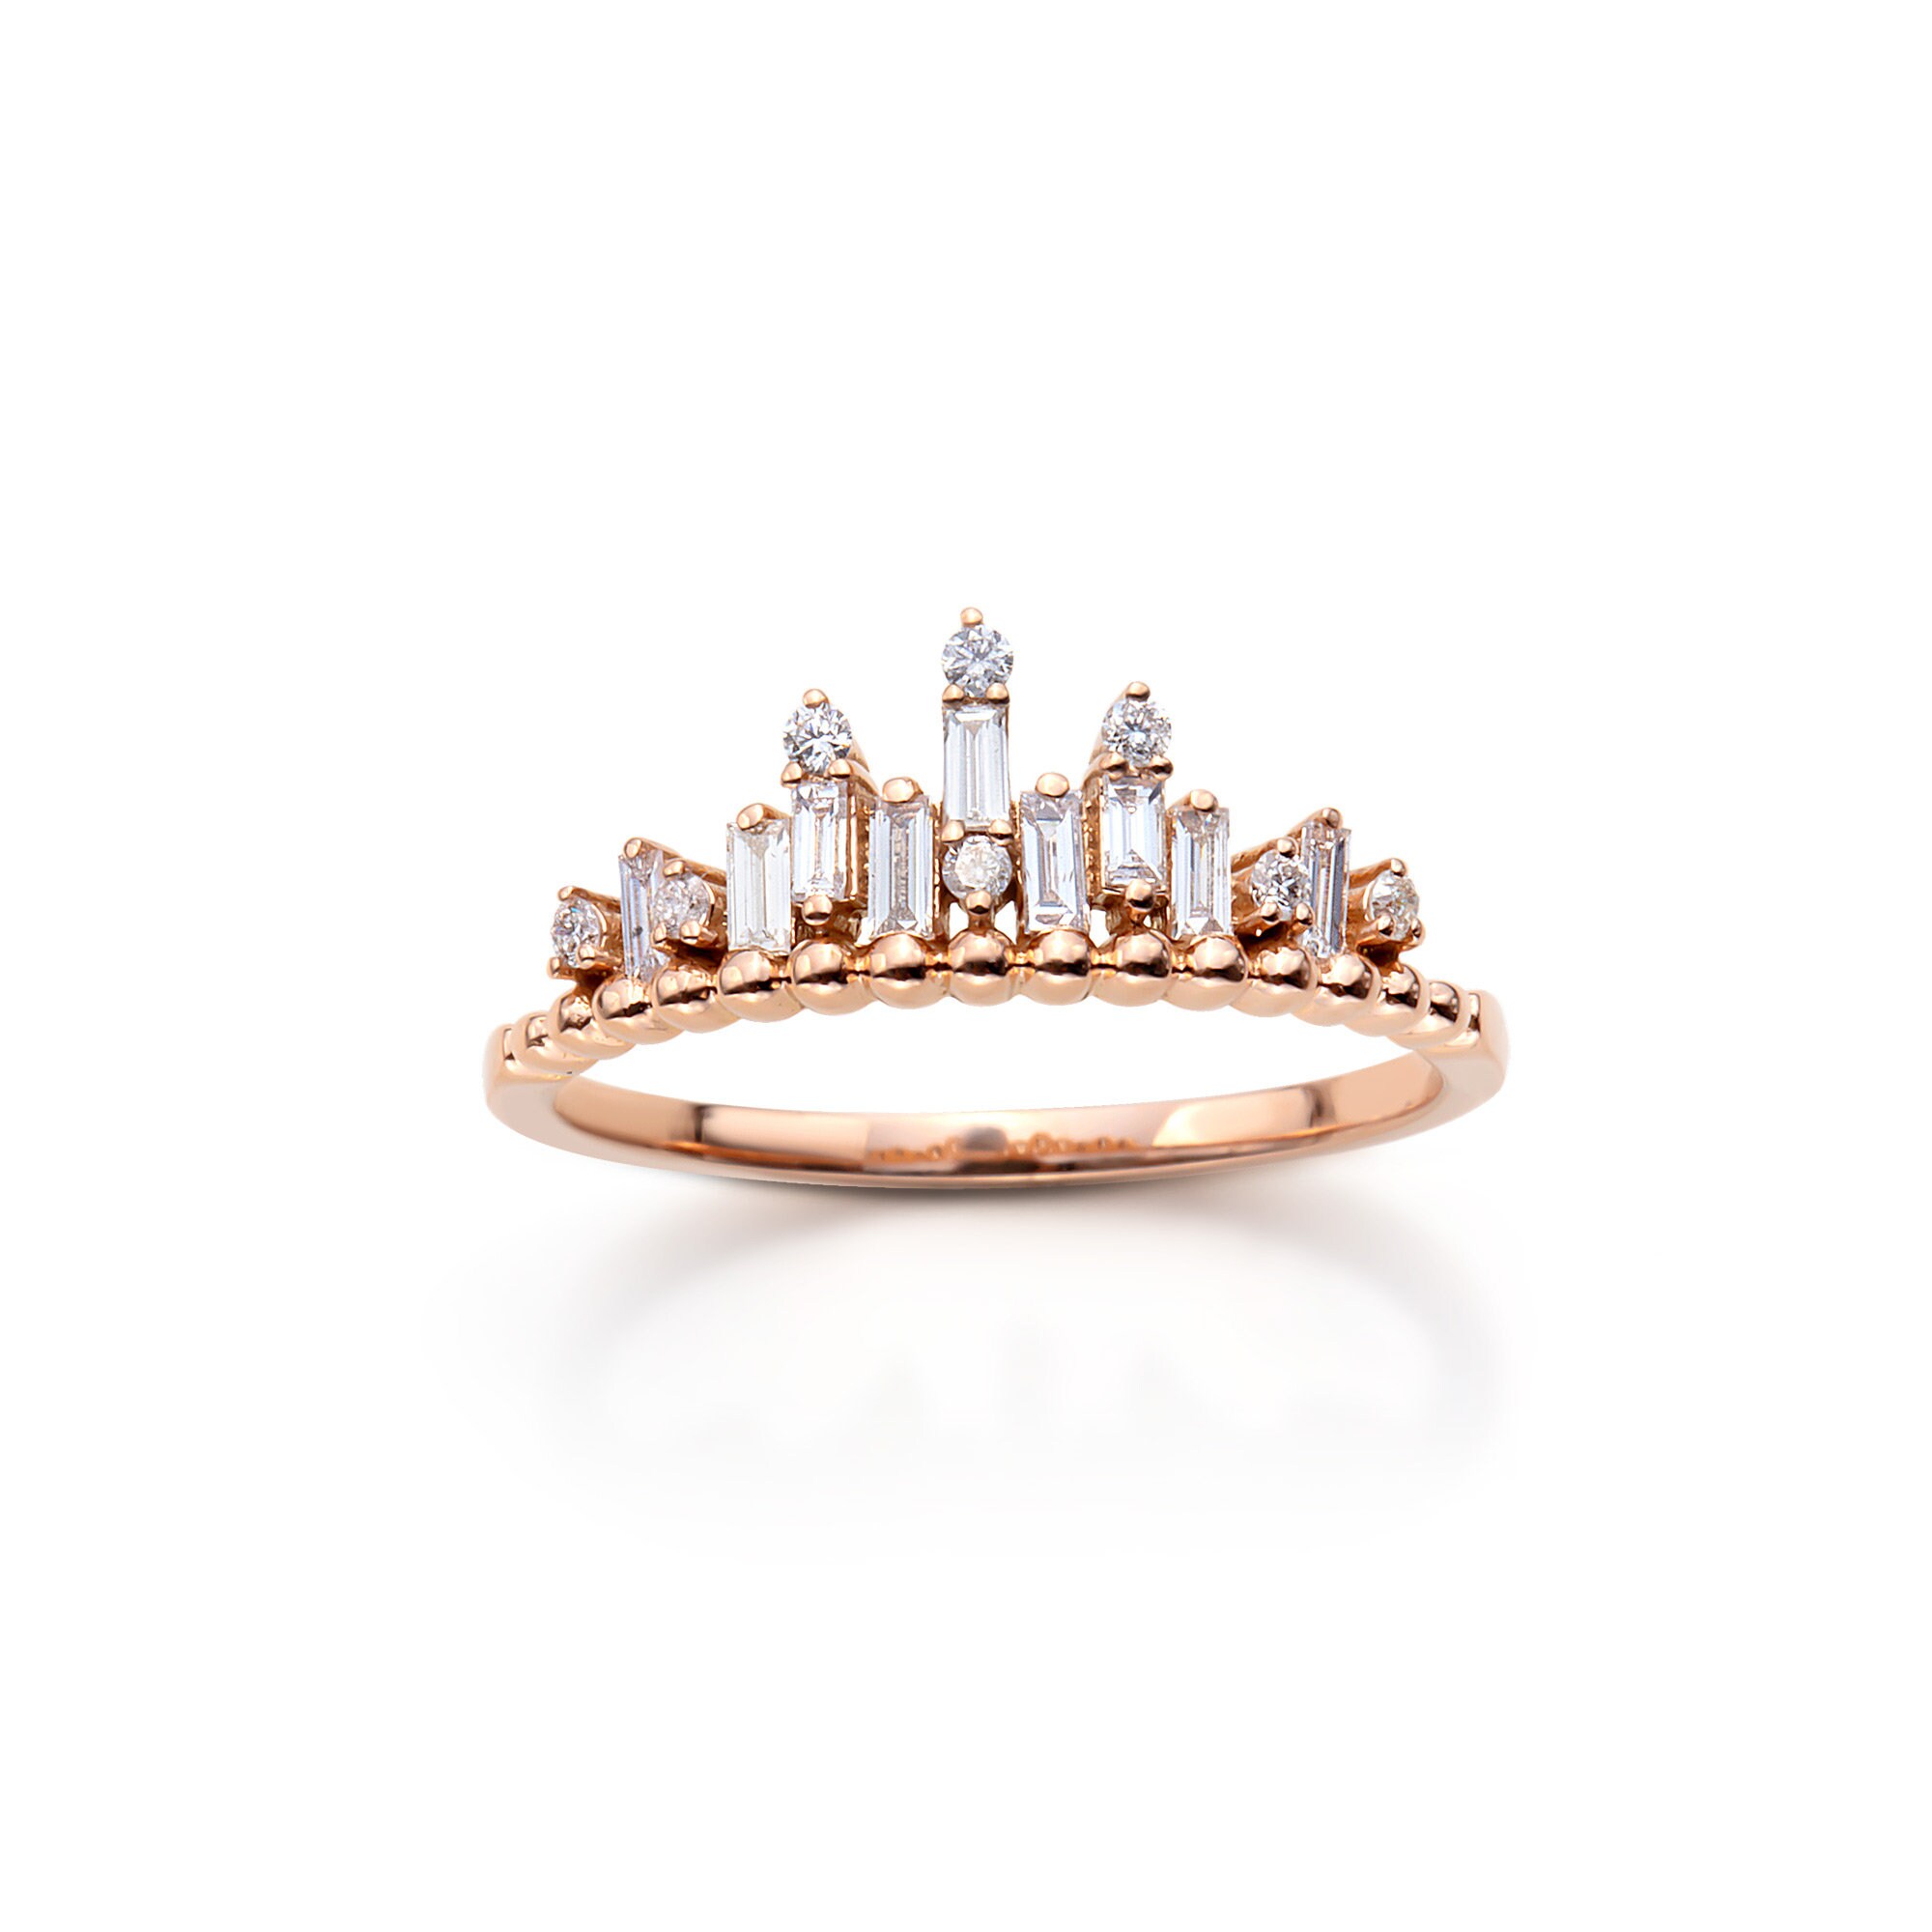 Super Shine 14mm Diamond Gold Shoe Letter Charm Diamond Crown